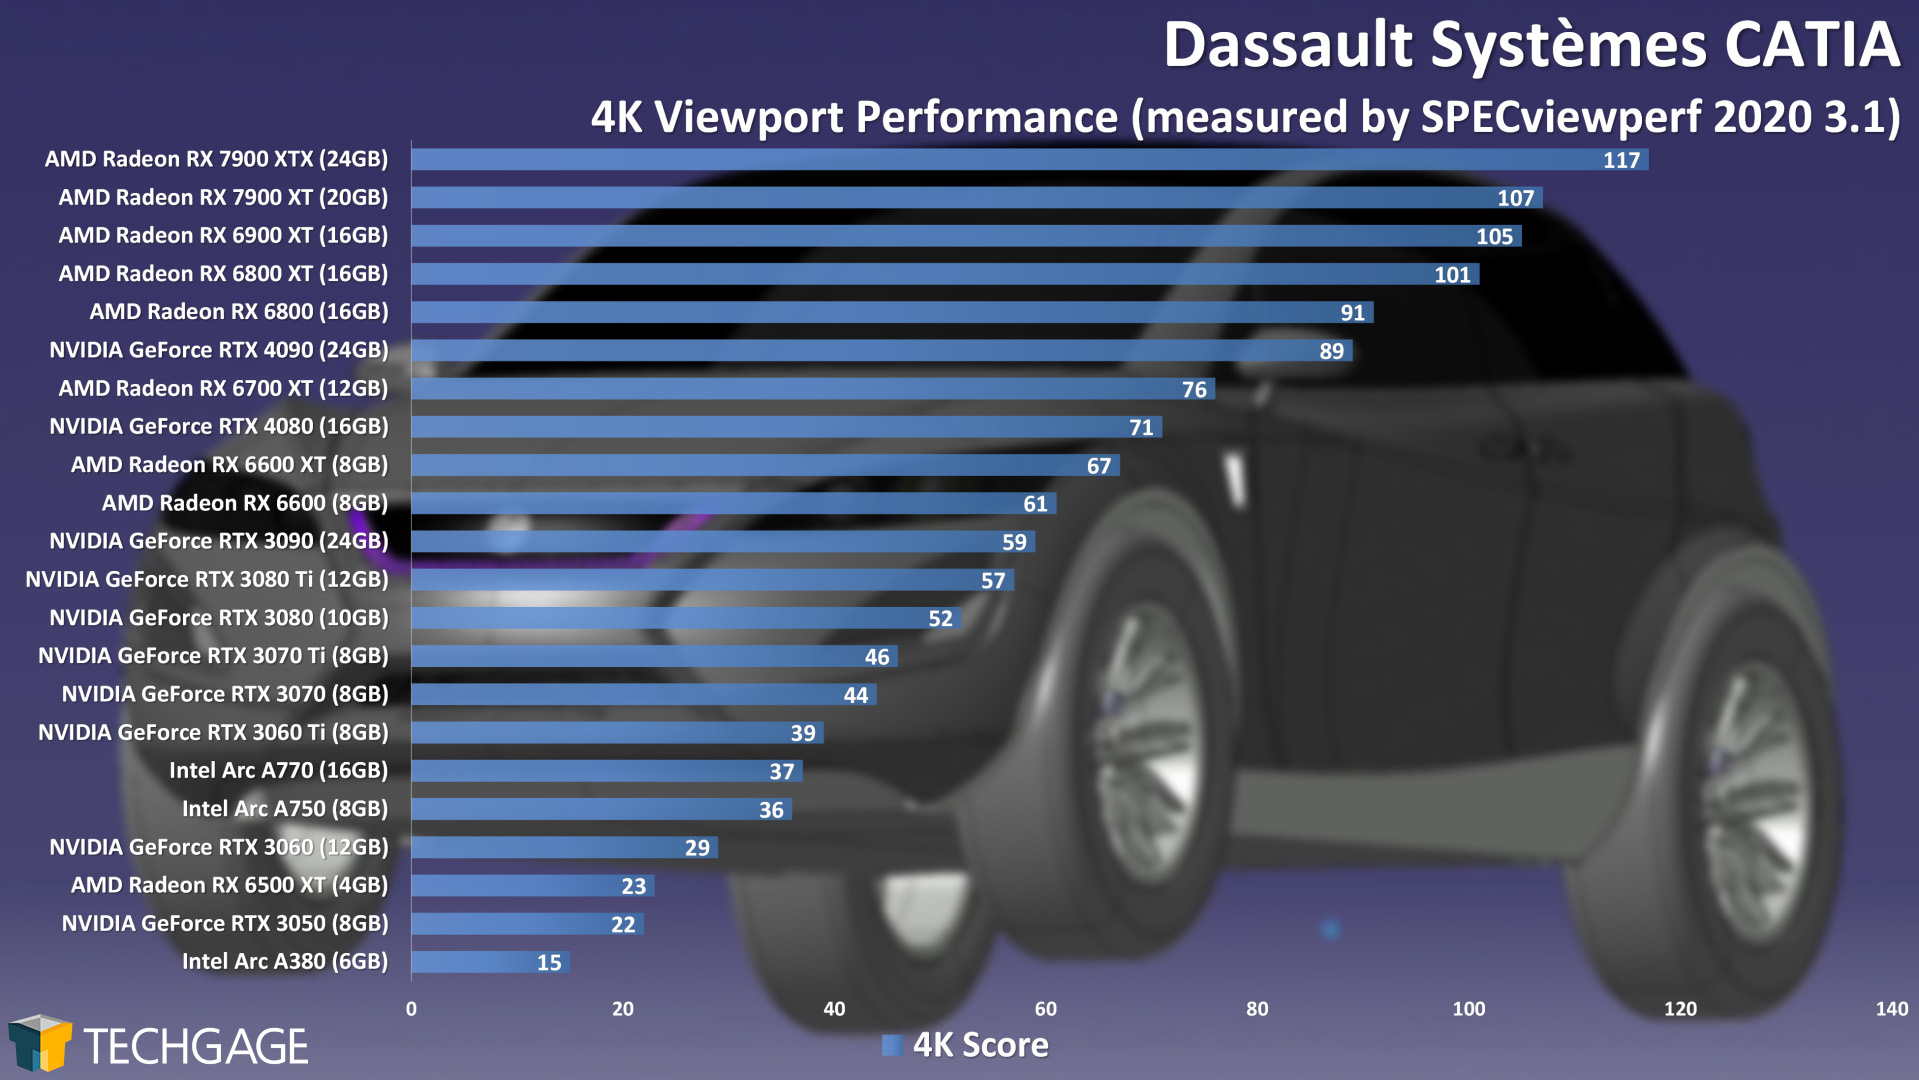 Dassault Systemes CATIA 4K Viewport Performance (AMD Radeon RX 7900 XT and XTX)